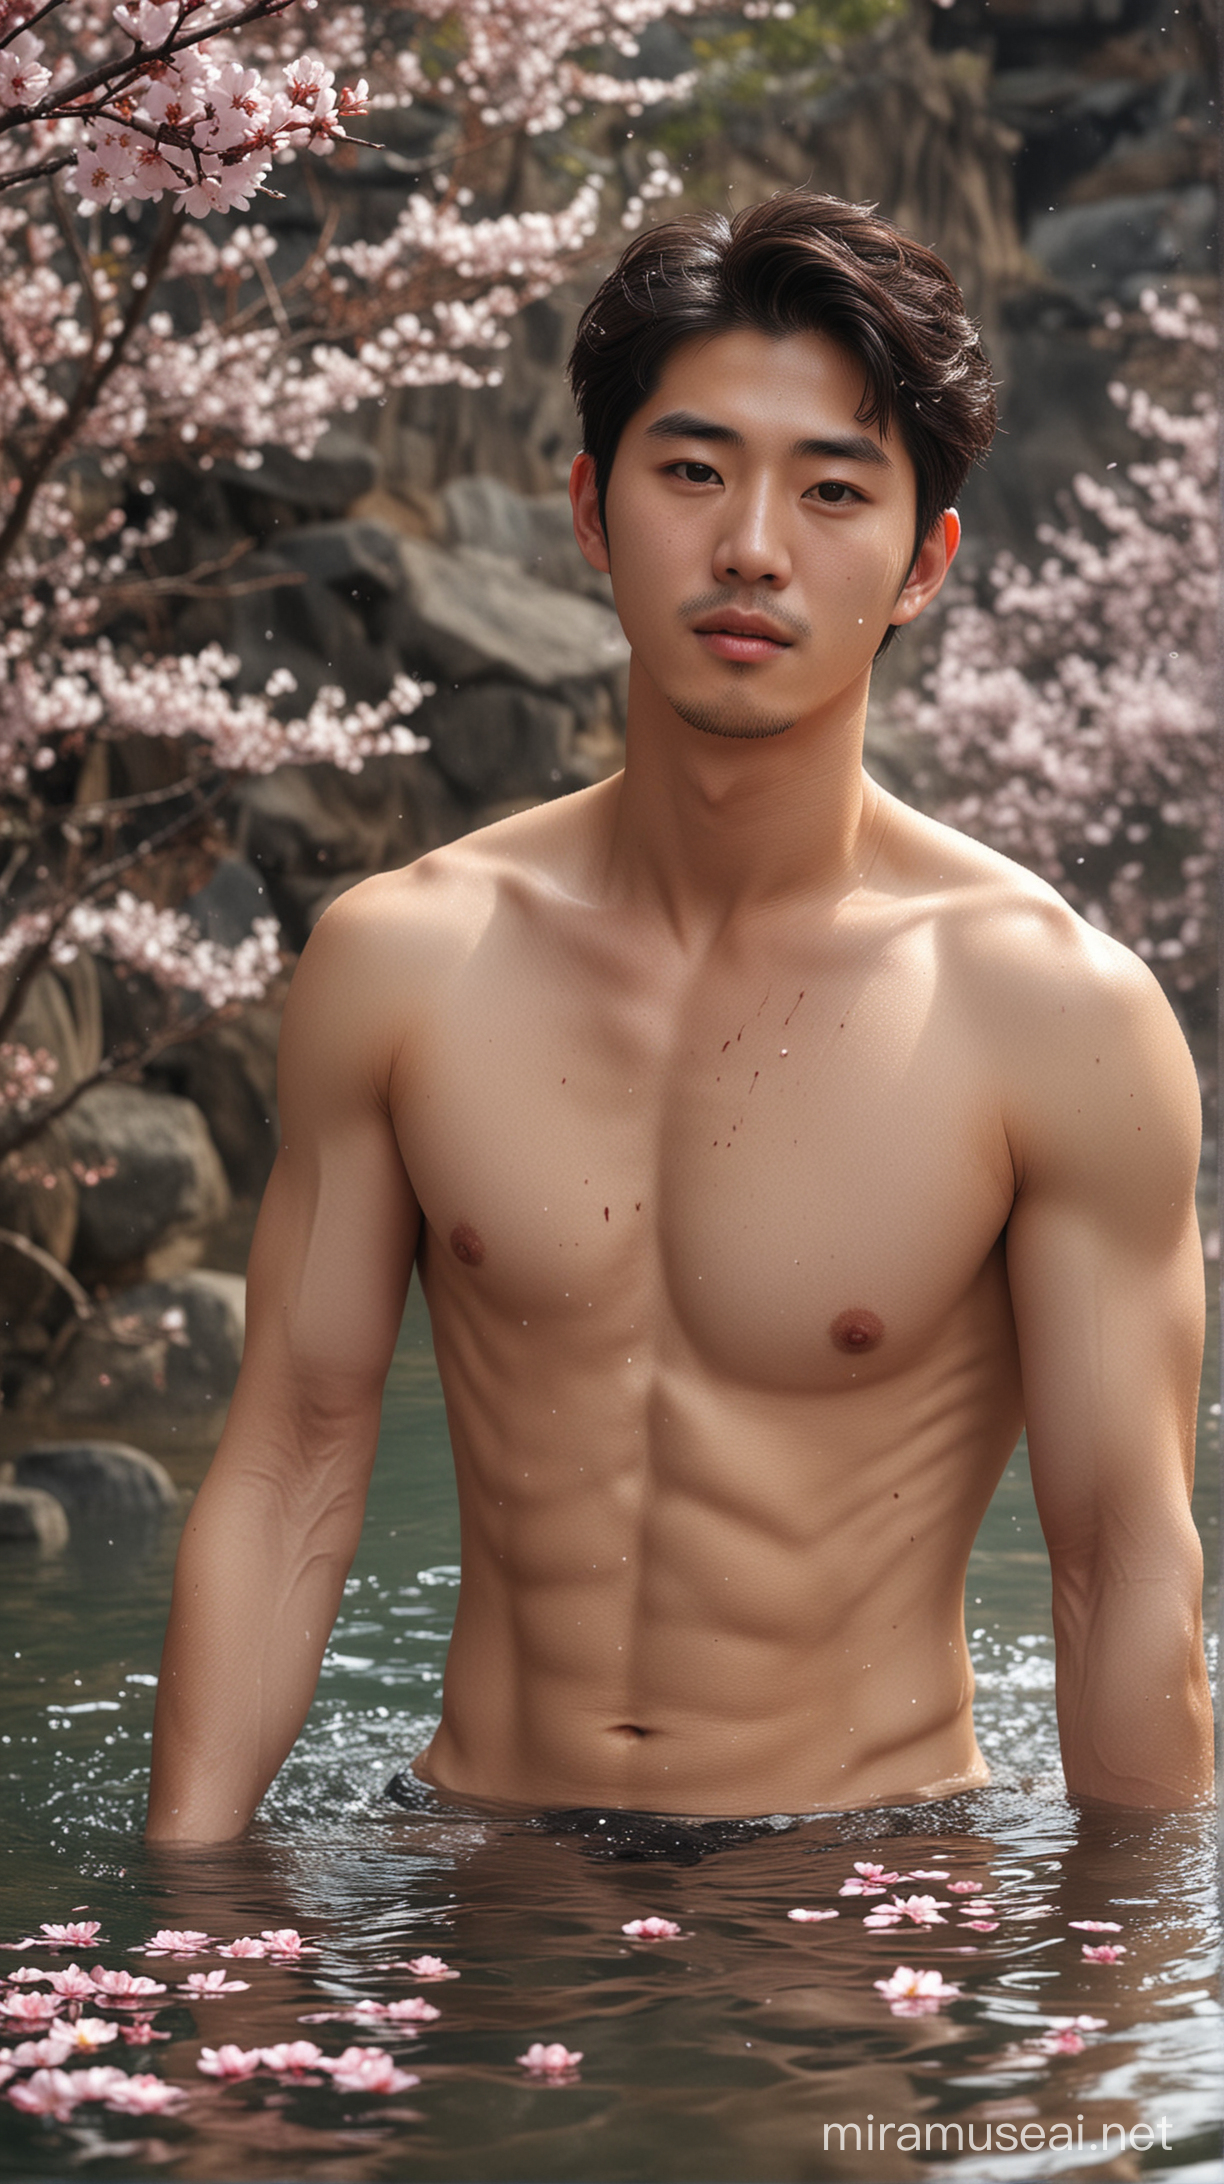 Handsome Korean Man Enjoying Cherry Blossom Onsen in Dynamic Pose